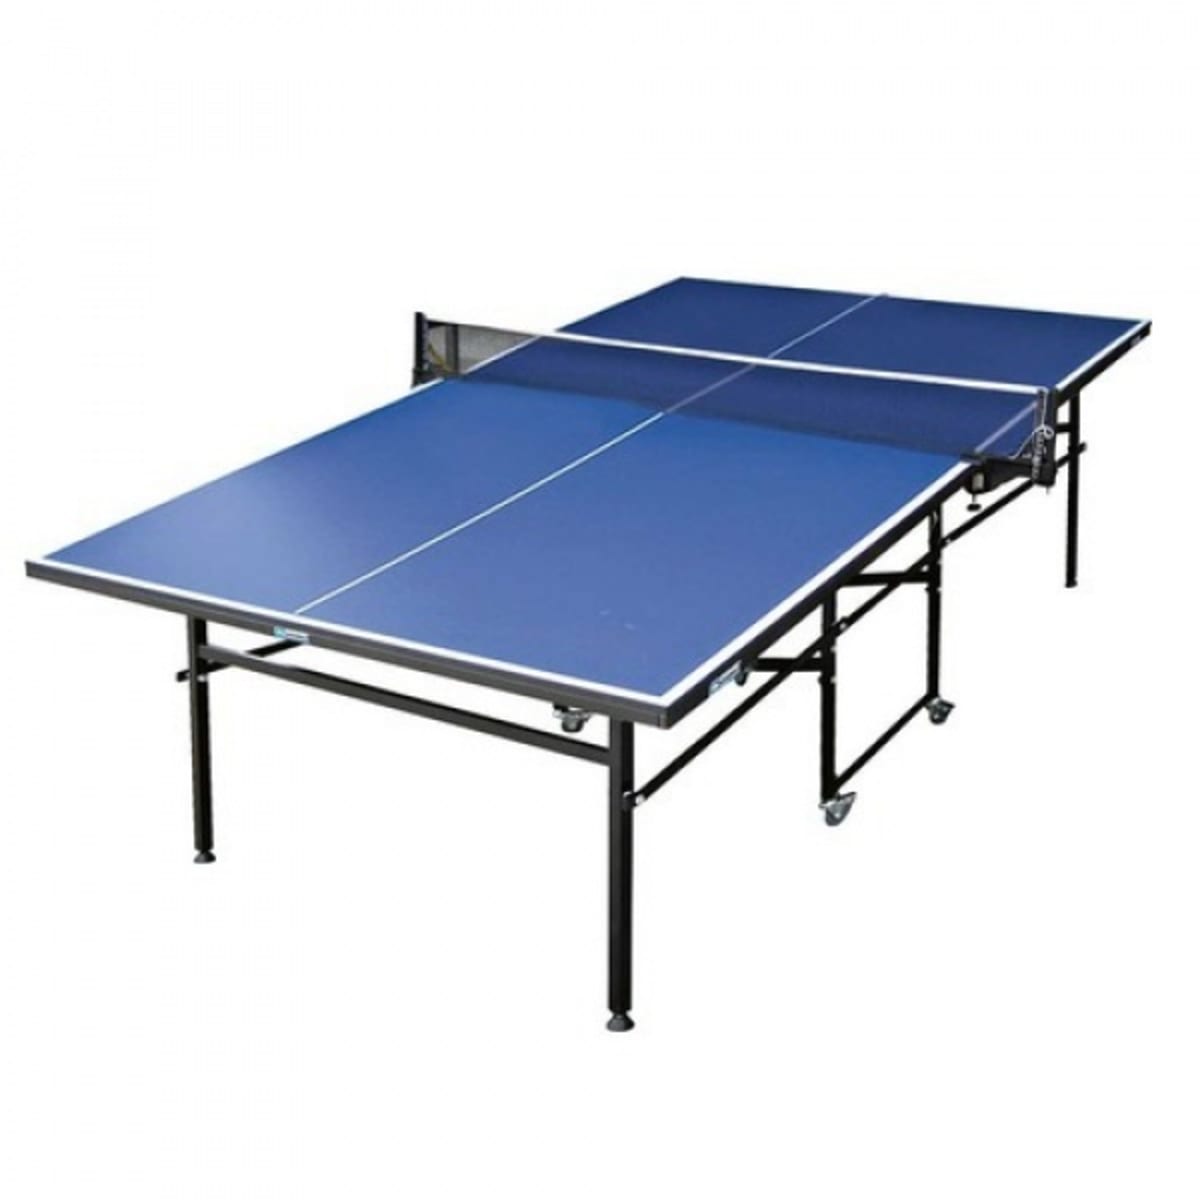 De Young Indoor Table Tennis Board Konga Online Shopping